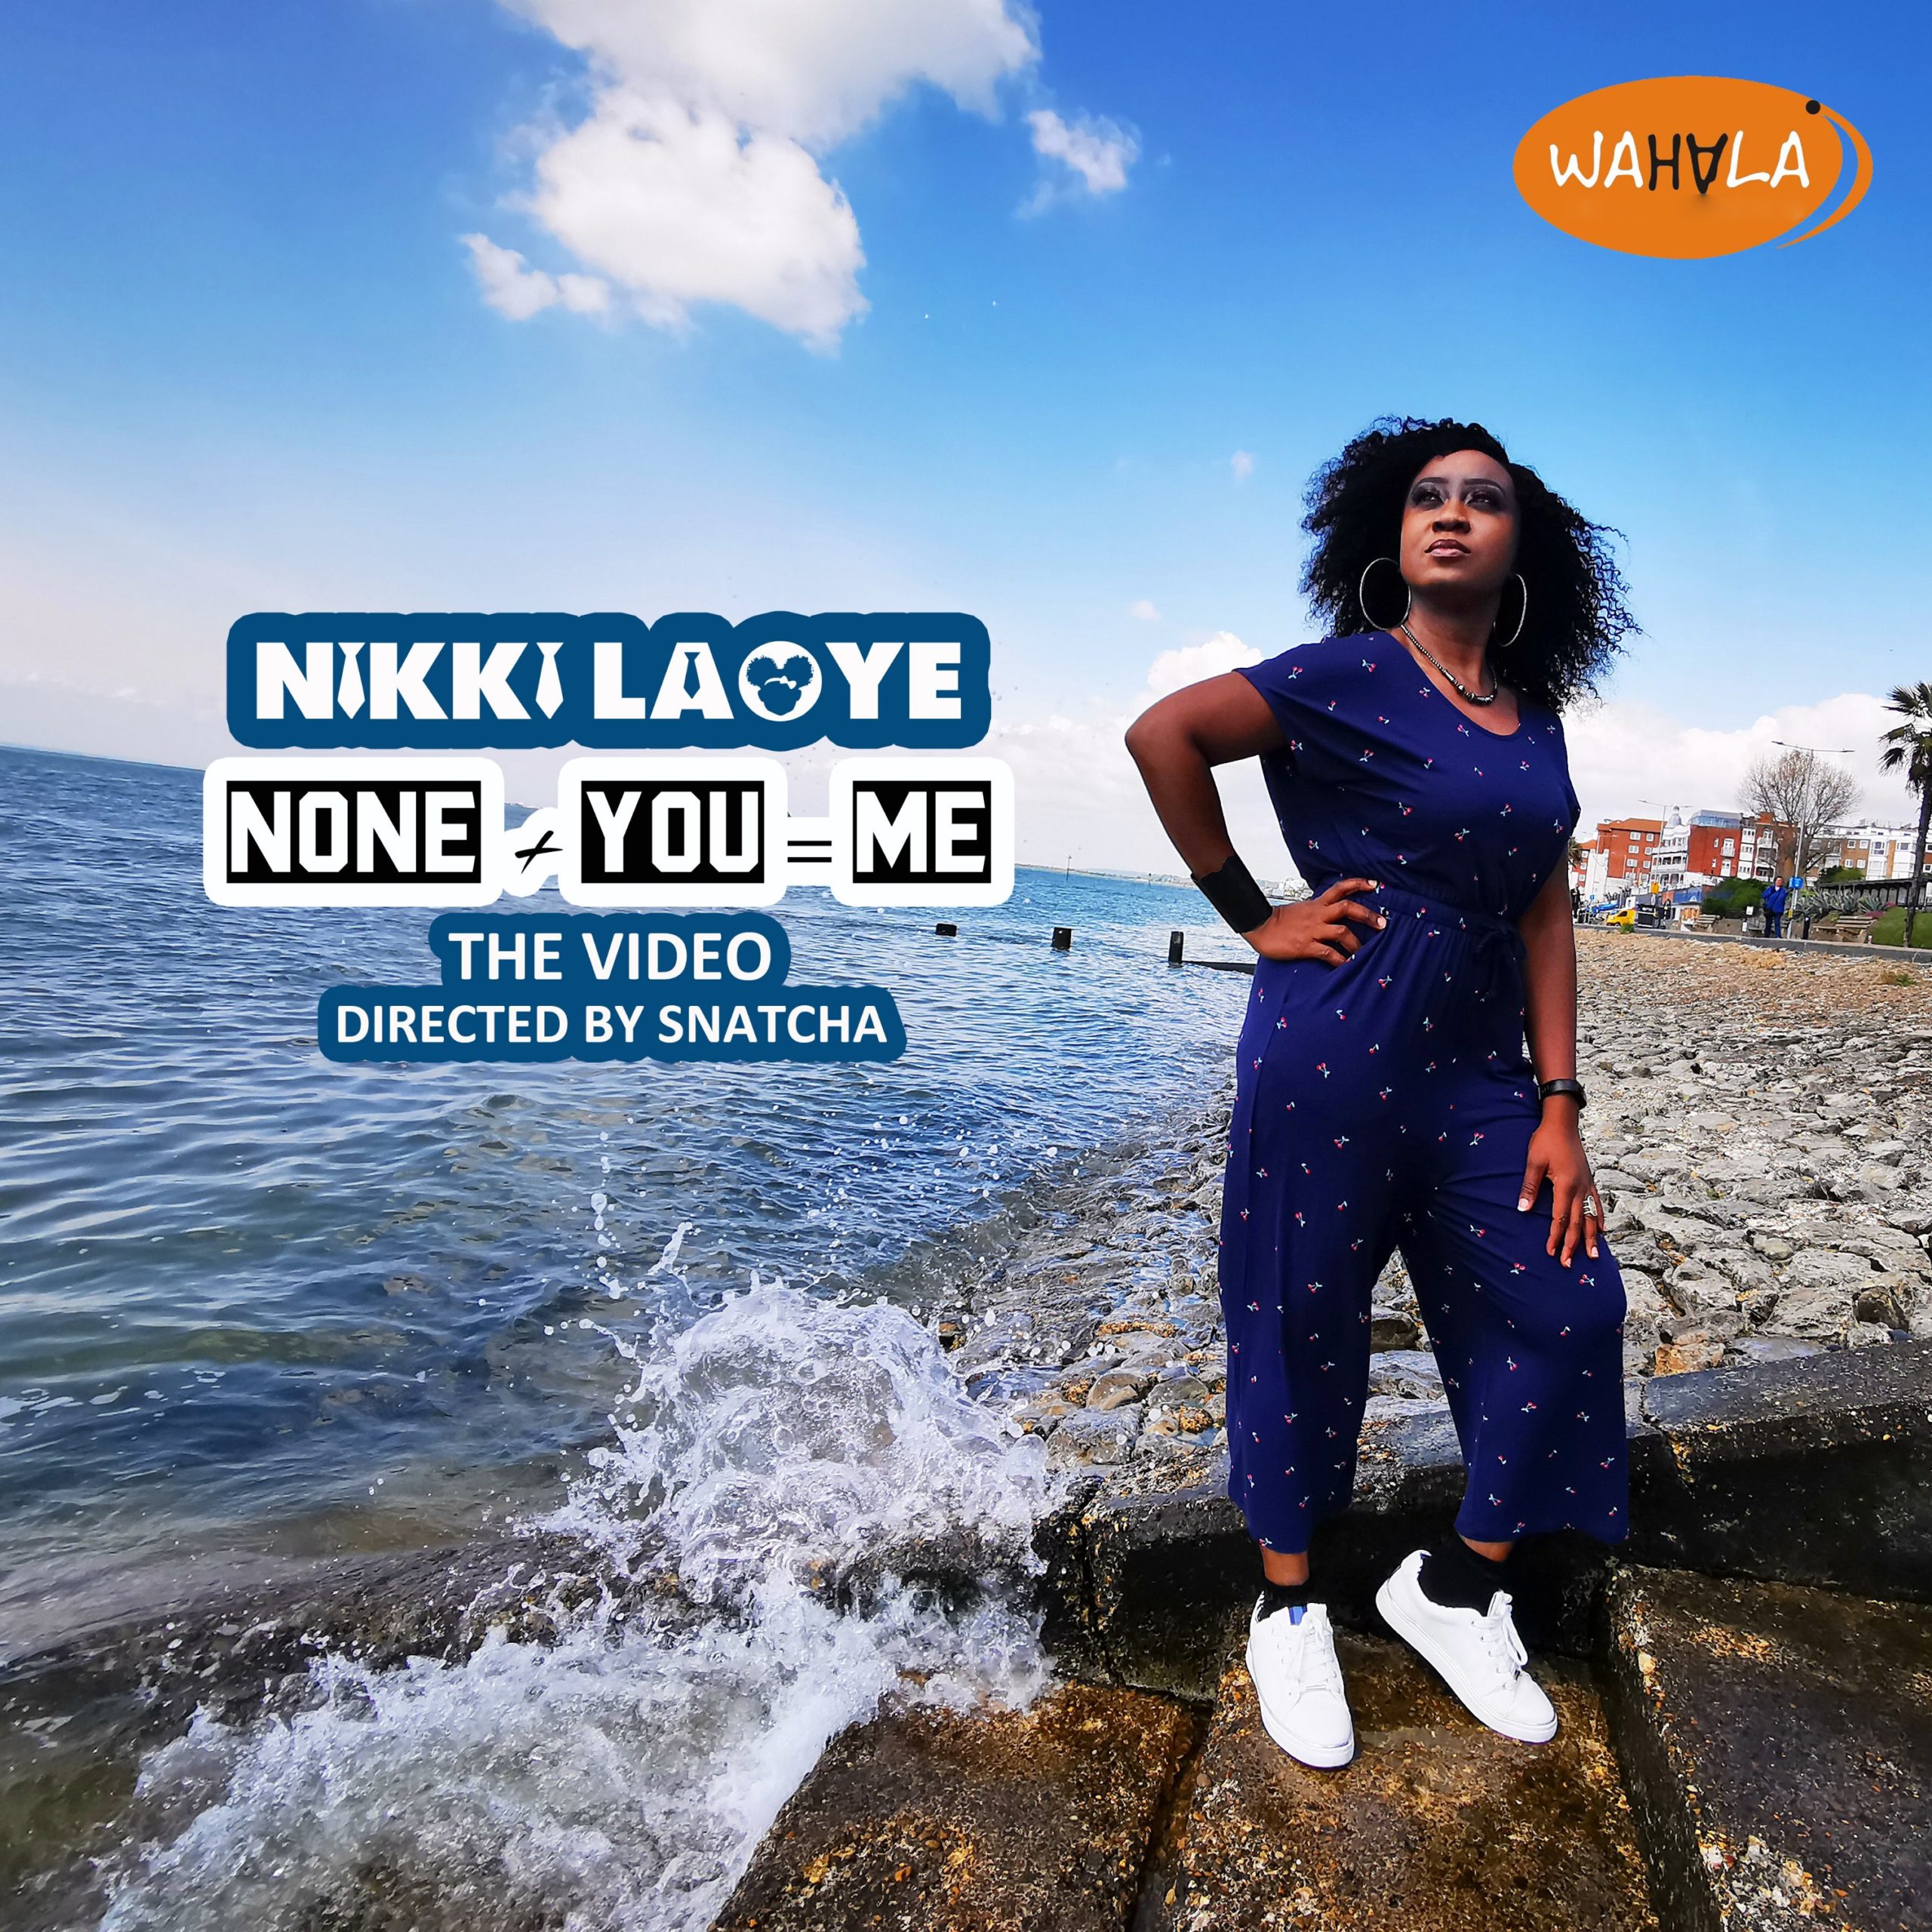 MUSIC Video: Nikki Laoye -  "None + YOU = Me"